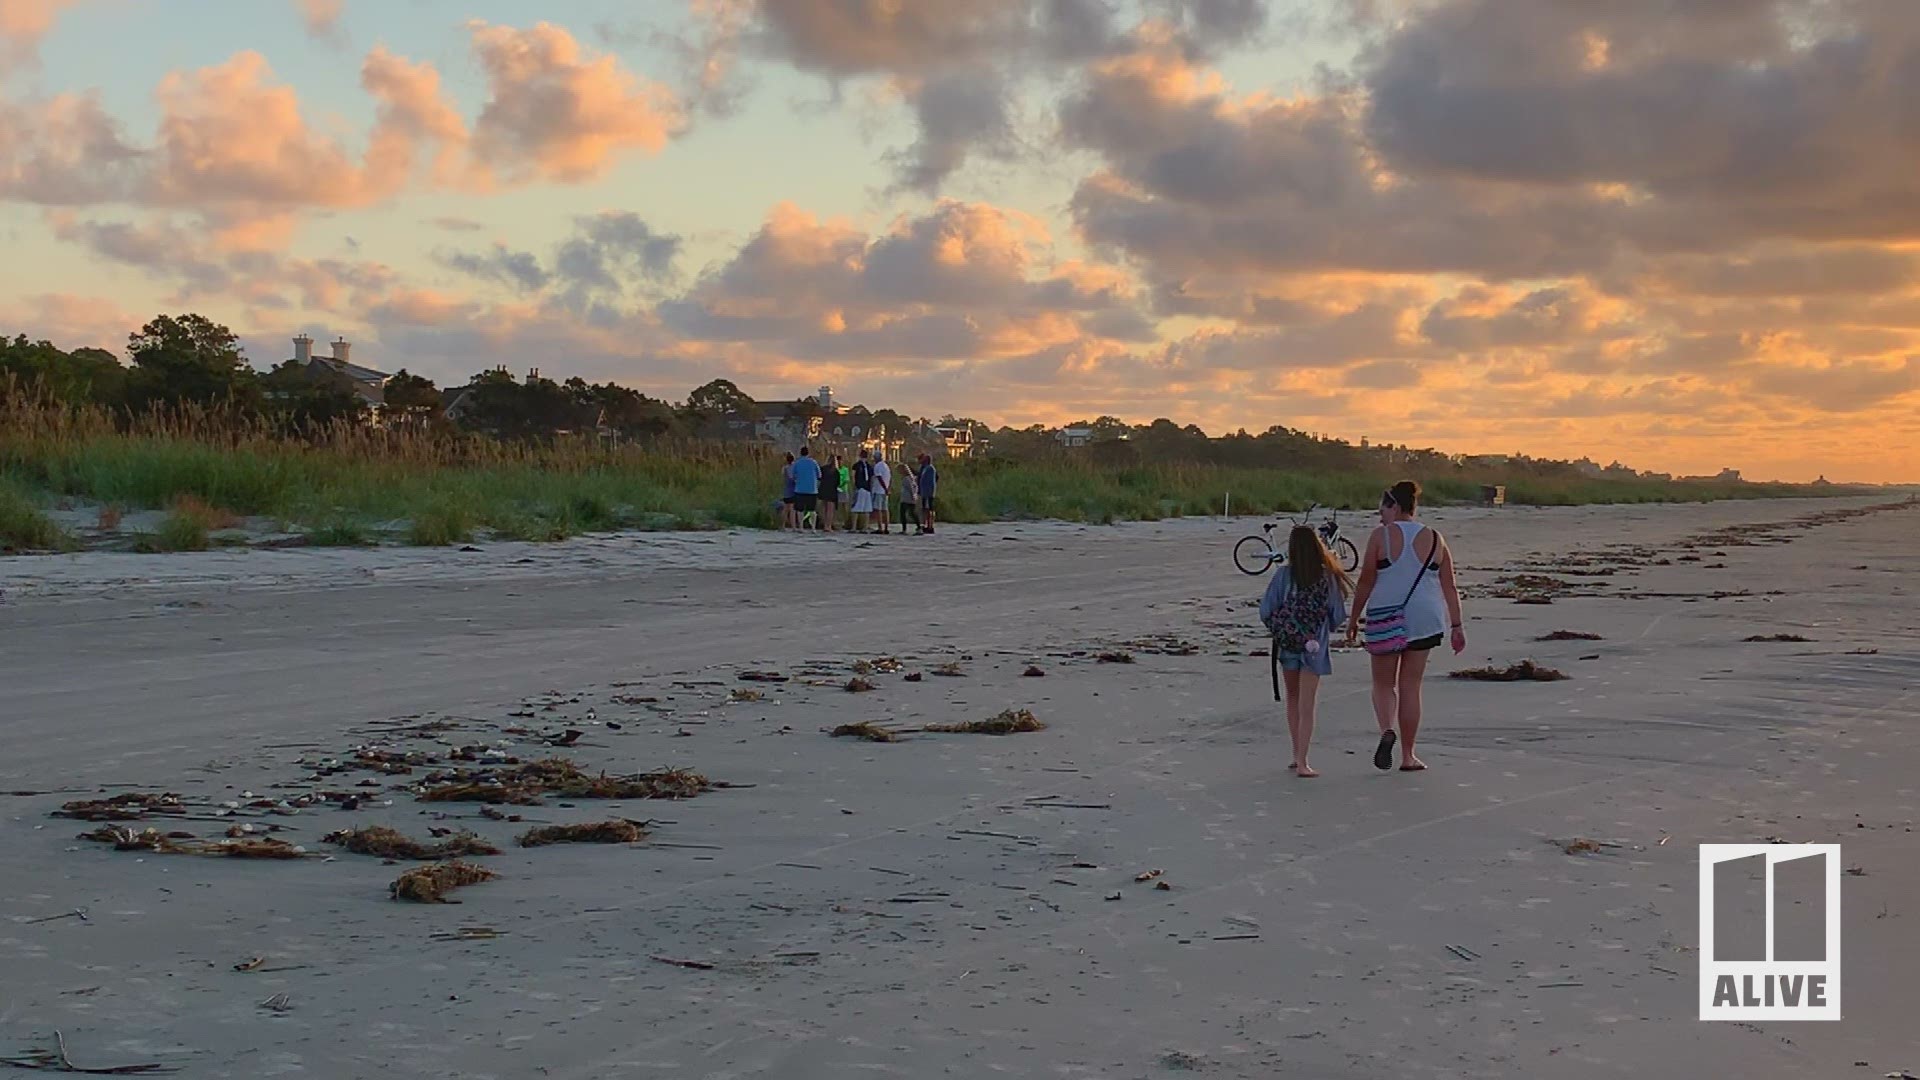 11Alive's Cheryl Preheim spent the day with the Turtle Patrol on the South Carolina Beach.